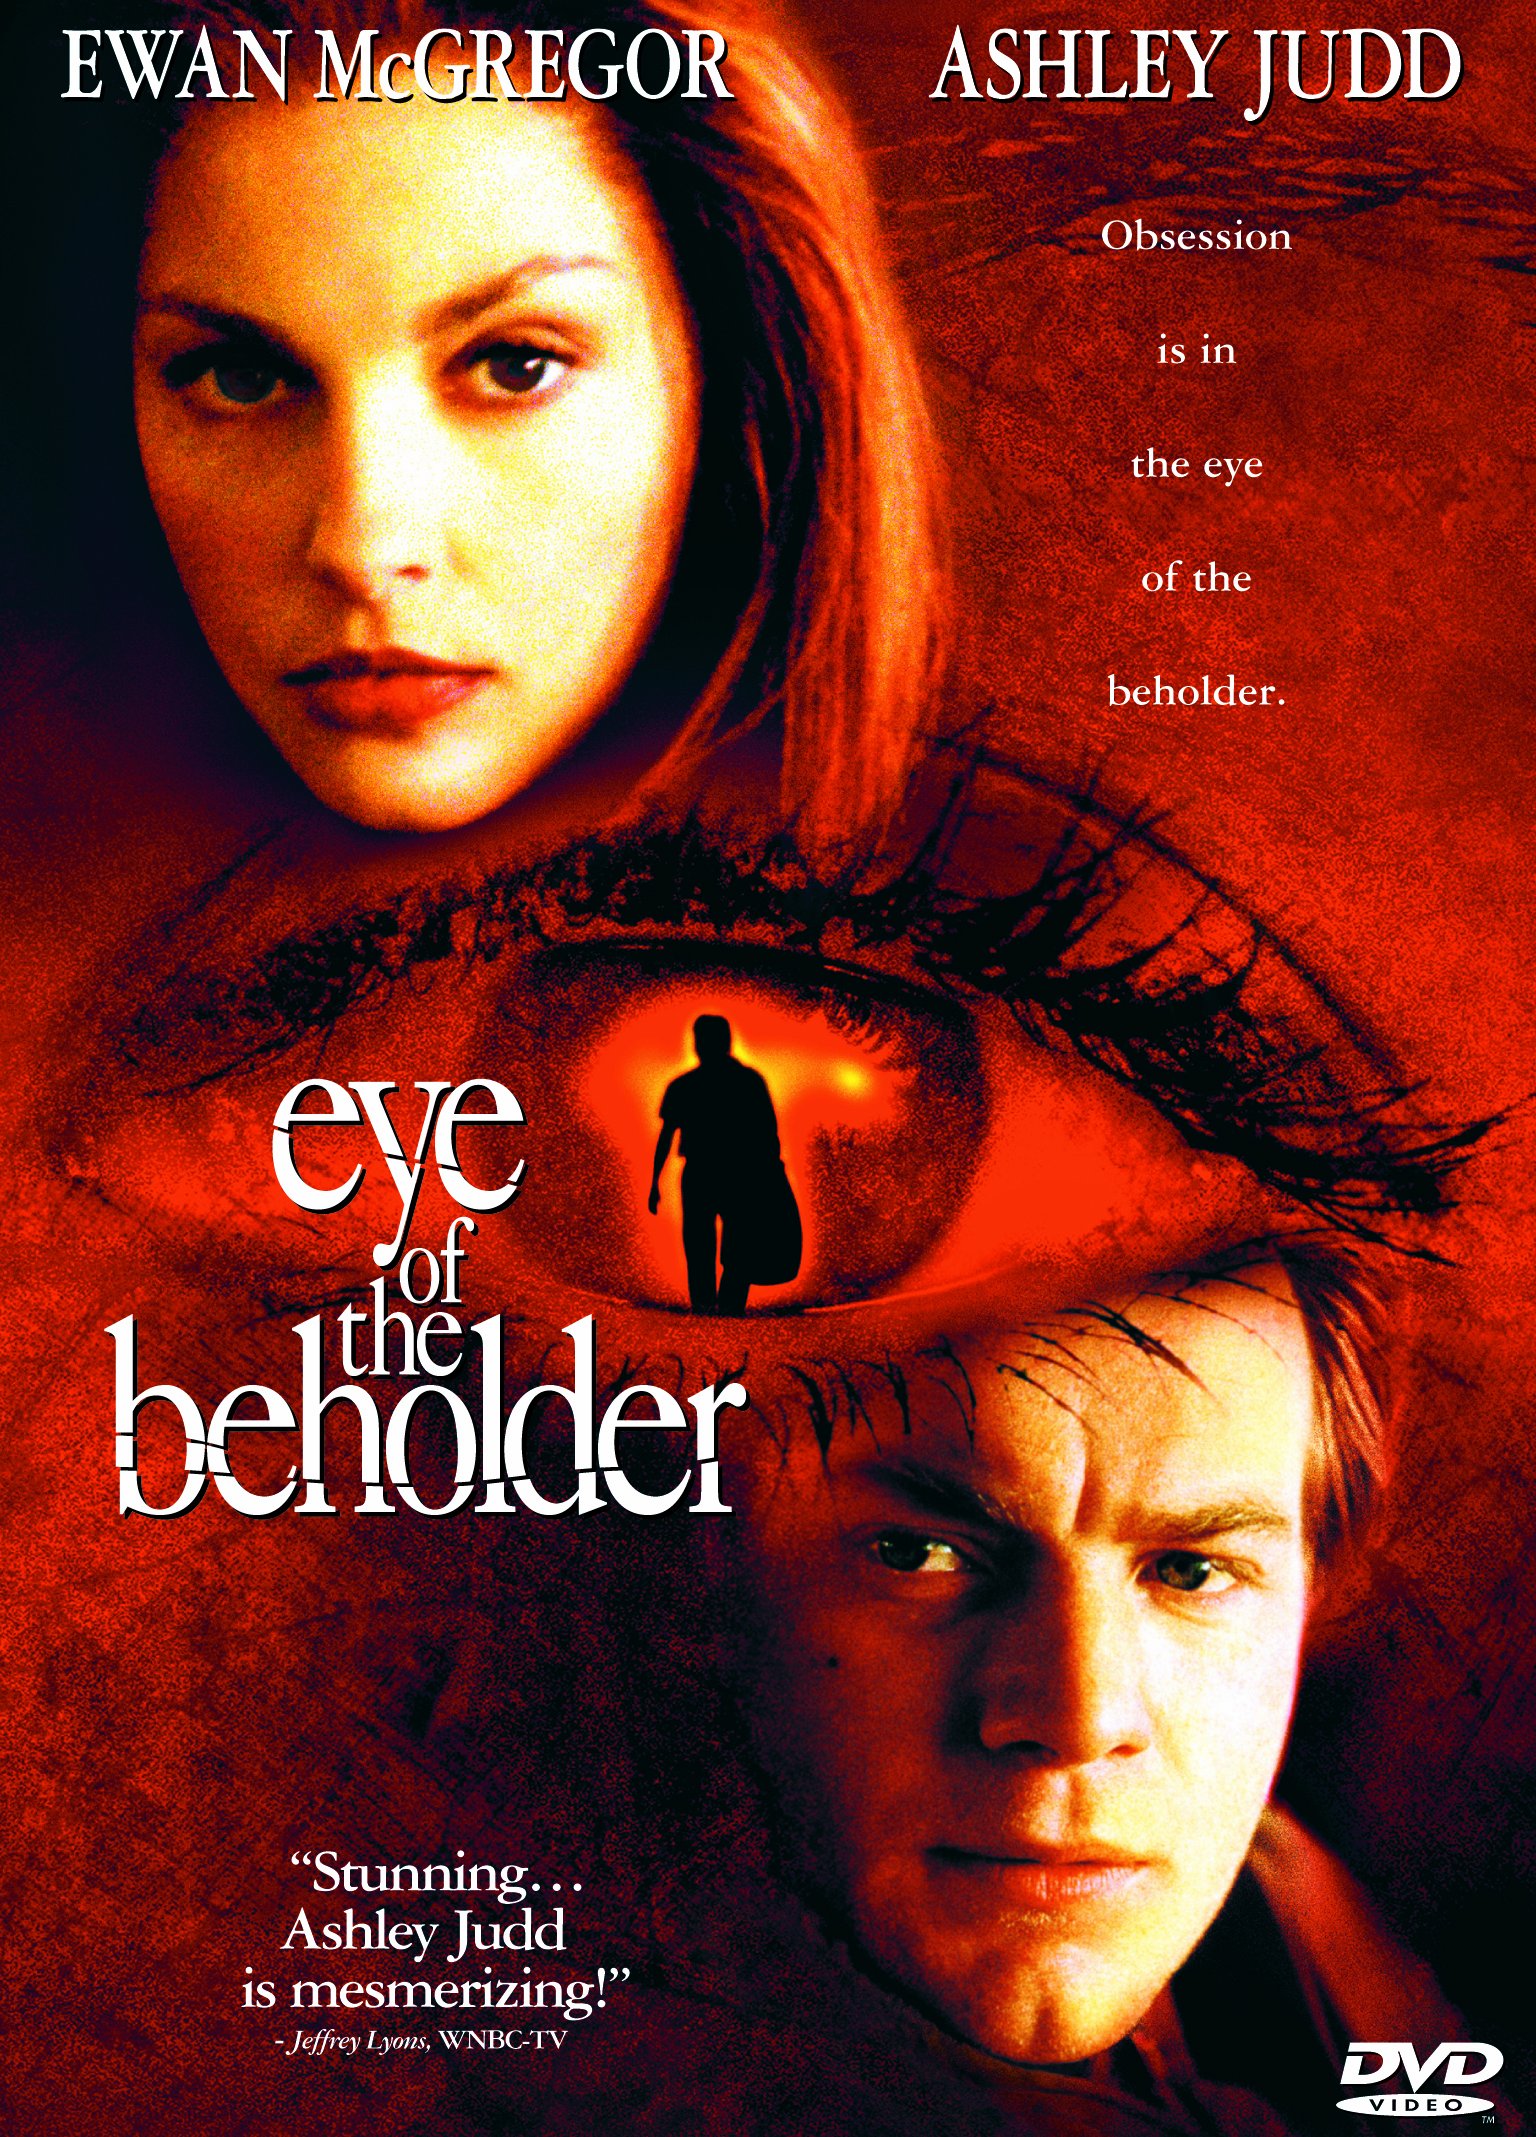 Eye of the Beholder DVD Release Date